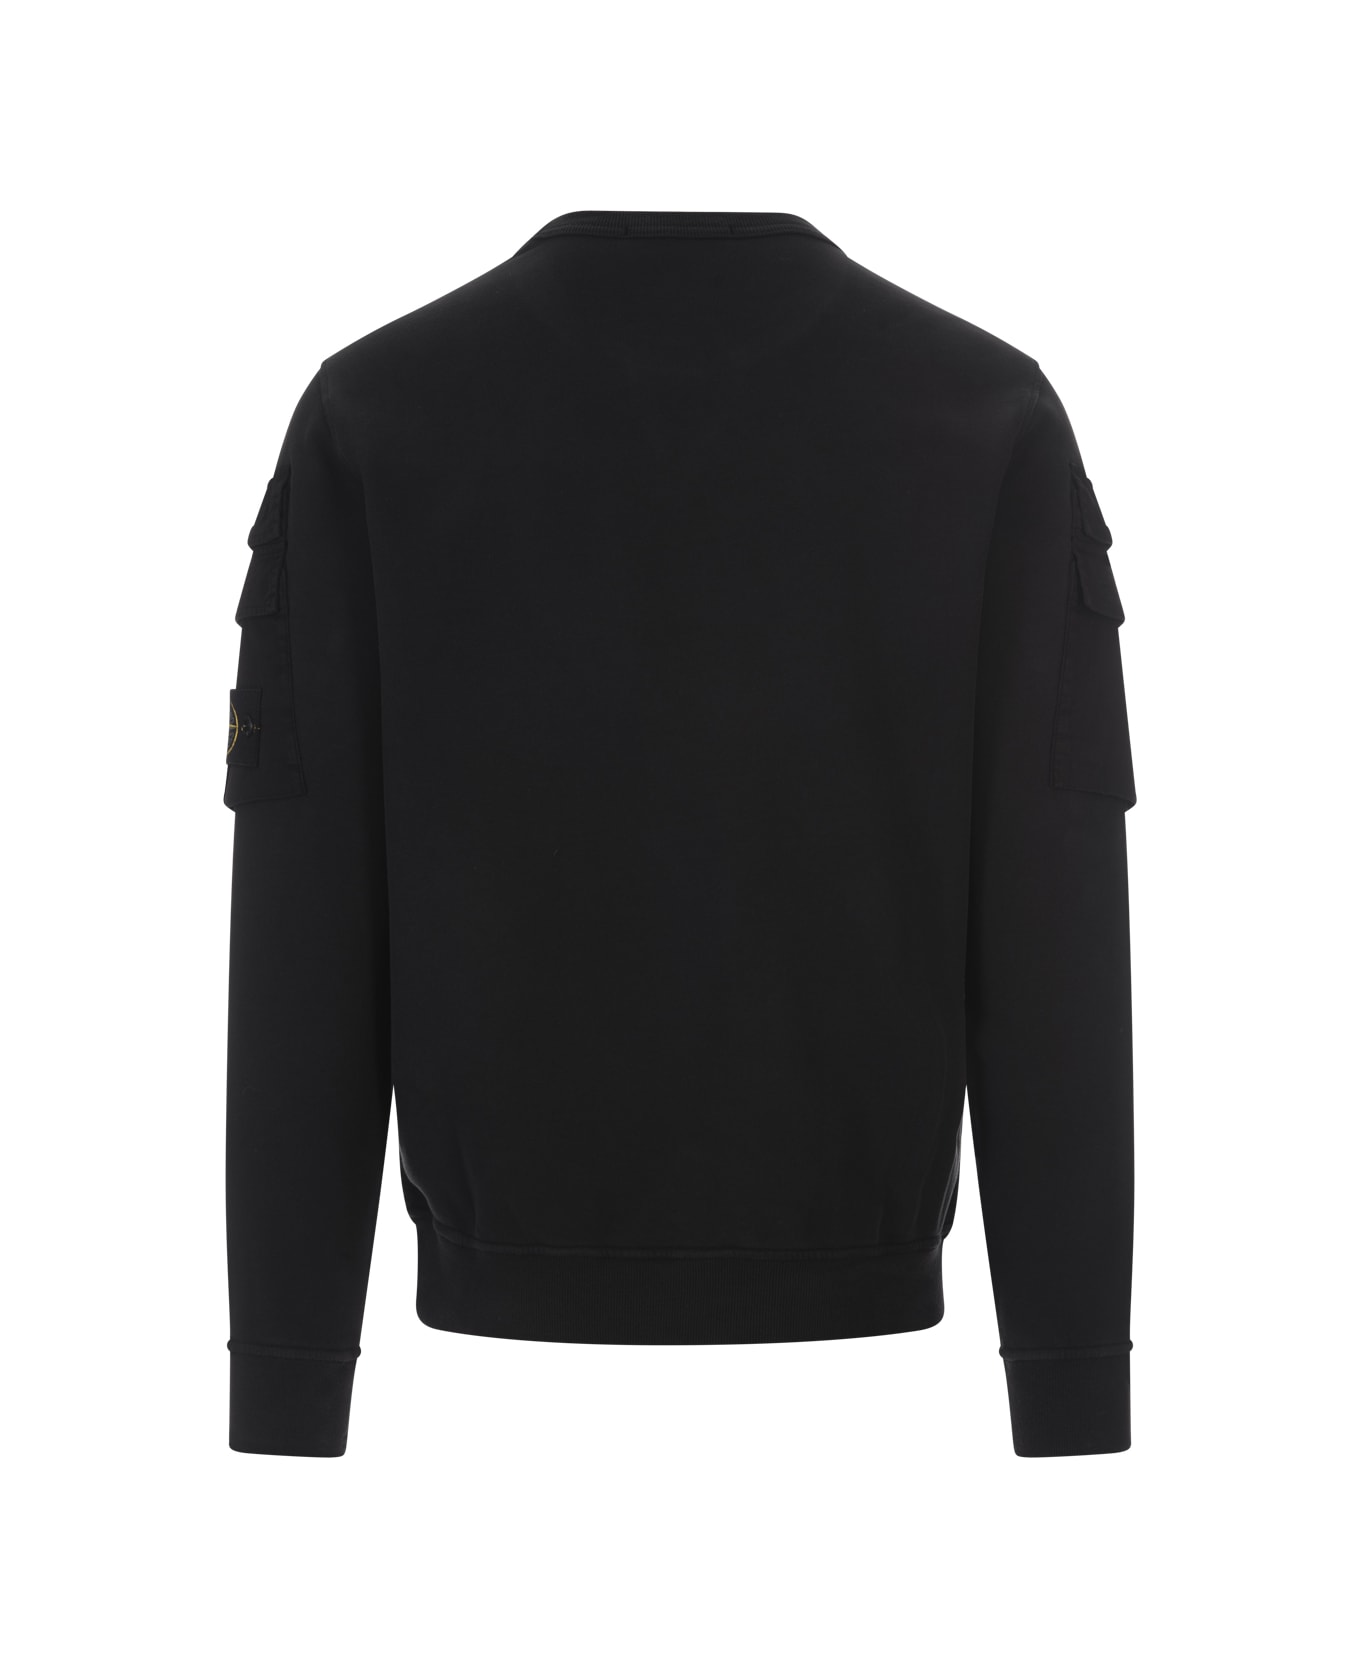 Stone Island Crewneck Sweatshirt With Pockets - Black